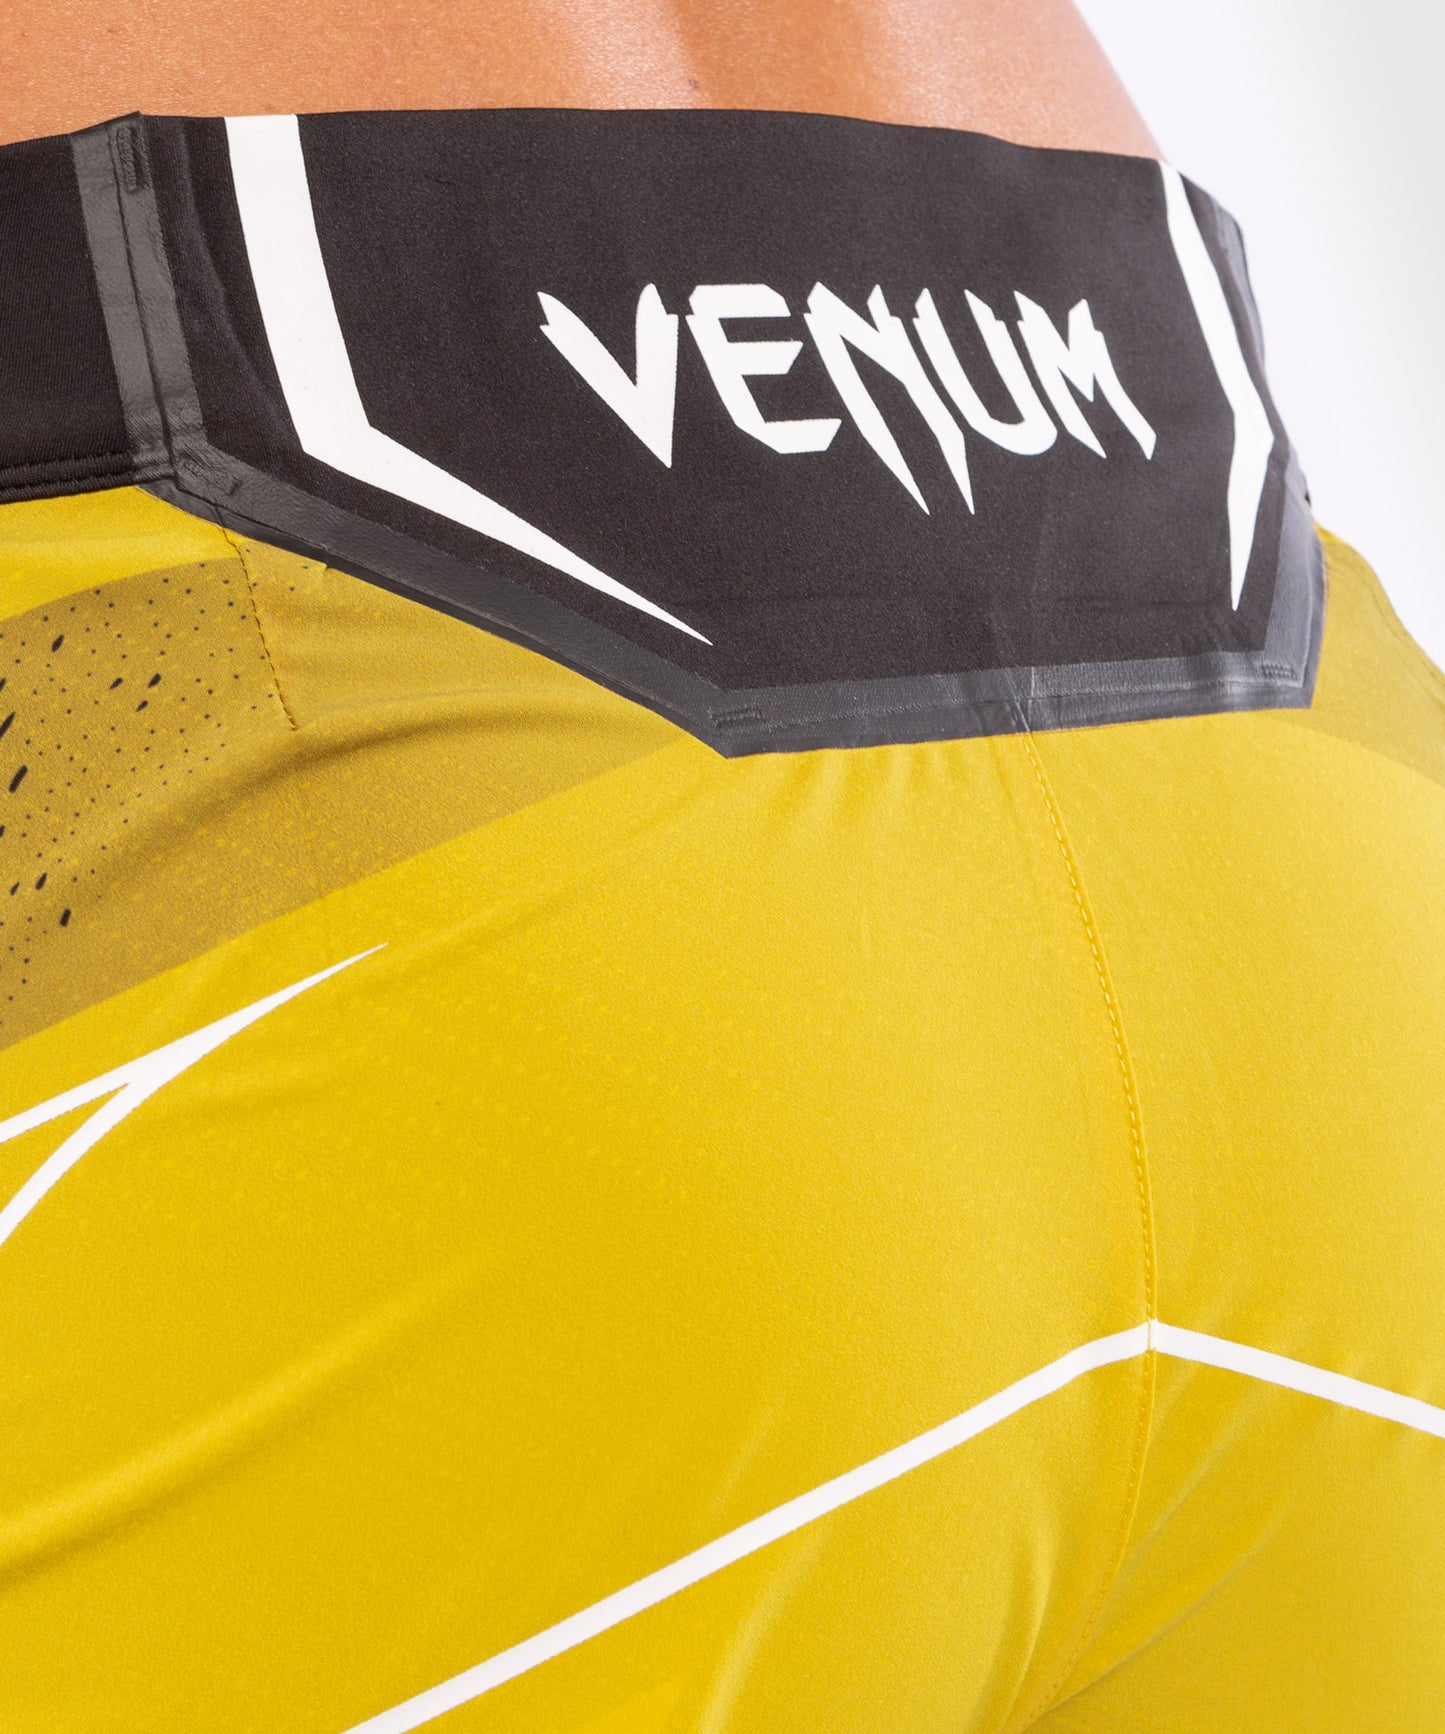 Pantalón De Mma Para Mujer UFC Venum Authentic Fight Night – Modelo Corto - Amarillo